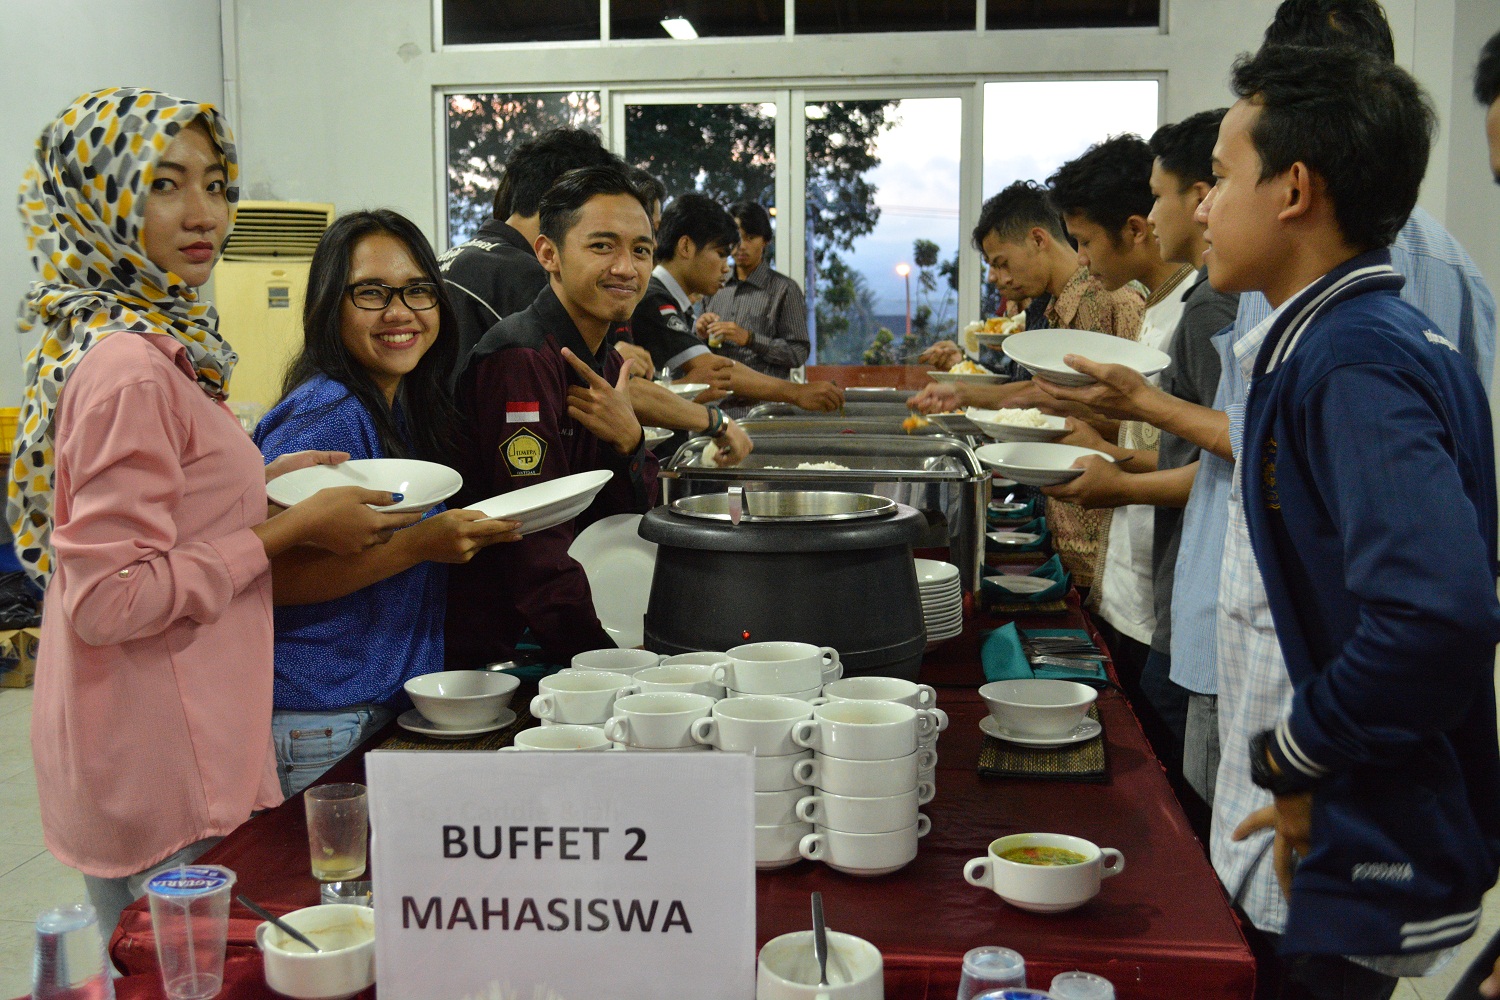 Mahasiswa perwakilan ormawa menikmati menu buka bersama seusai acara.